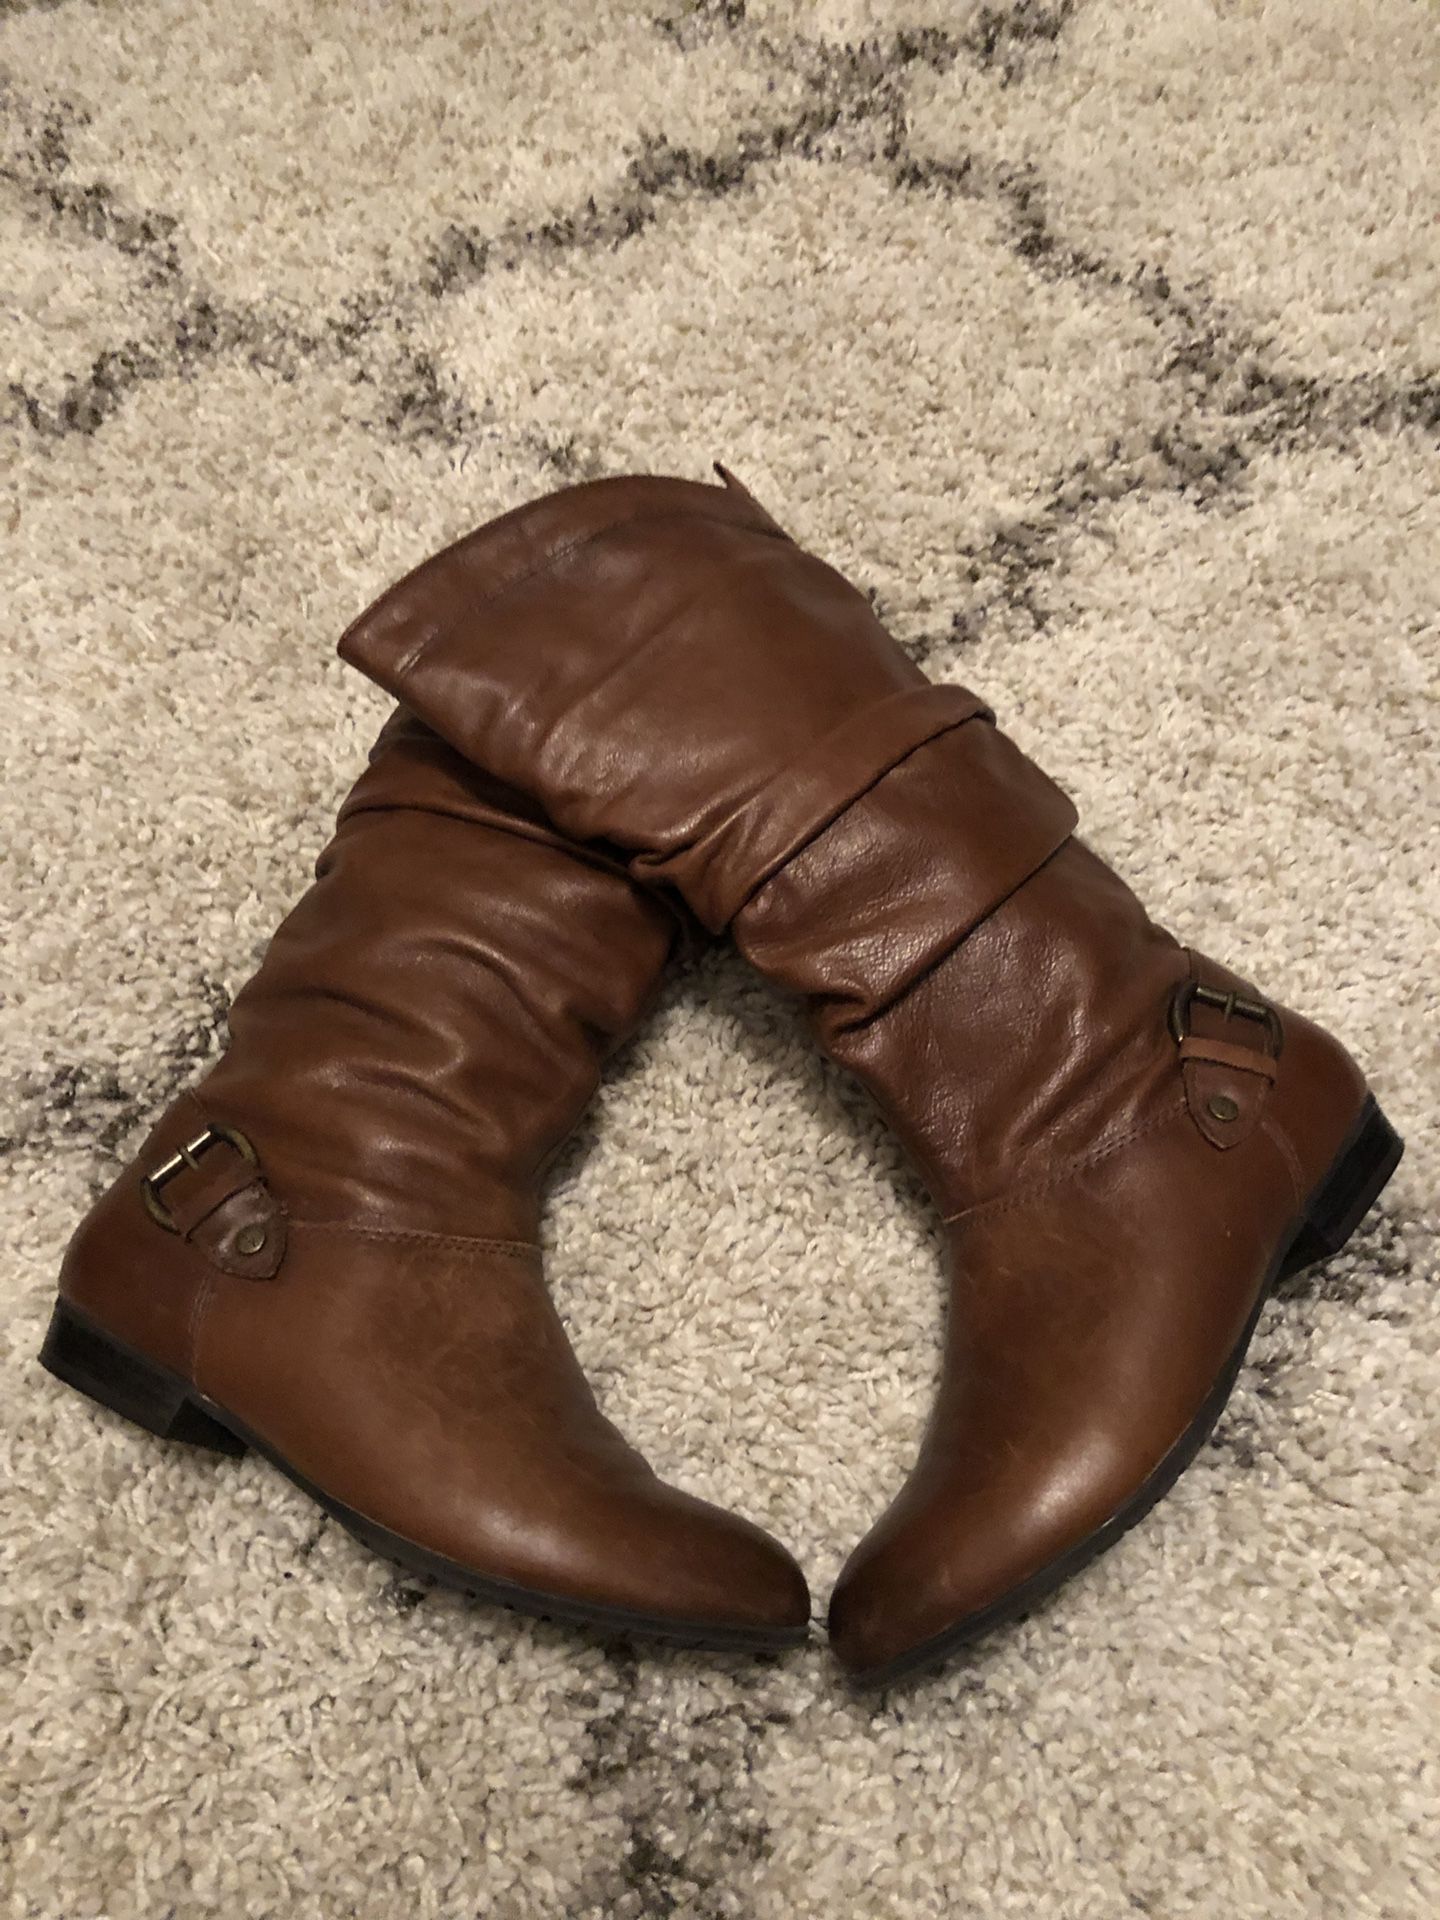 Aldo Leather Boots